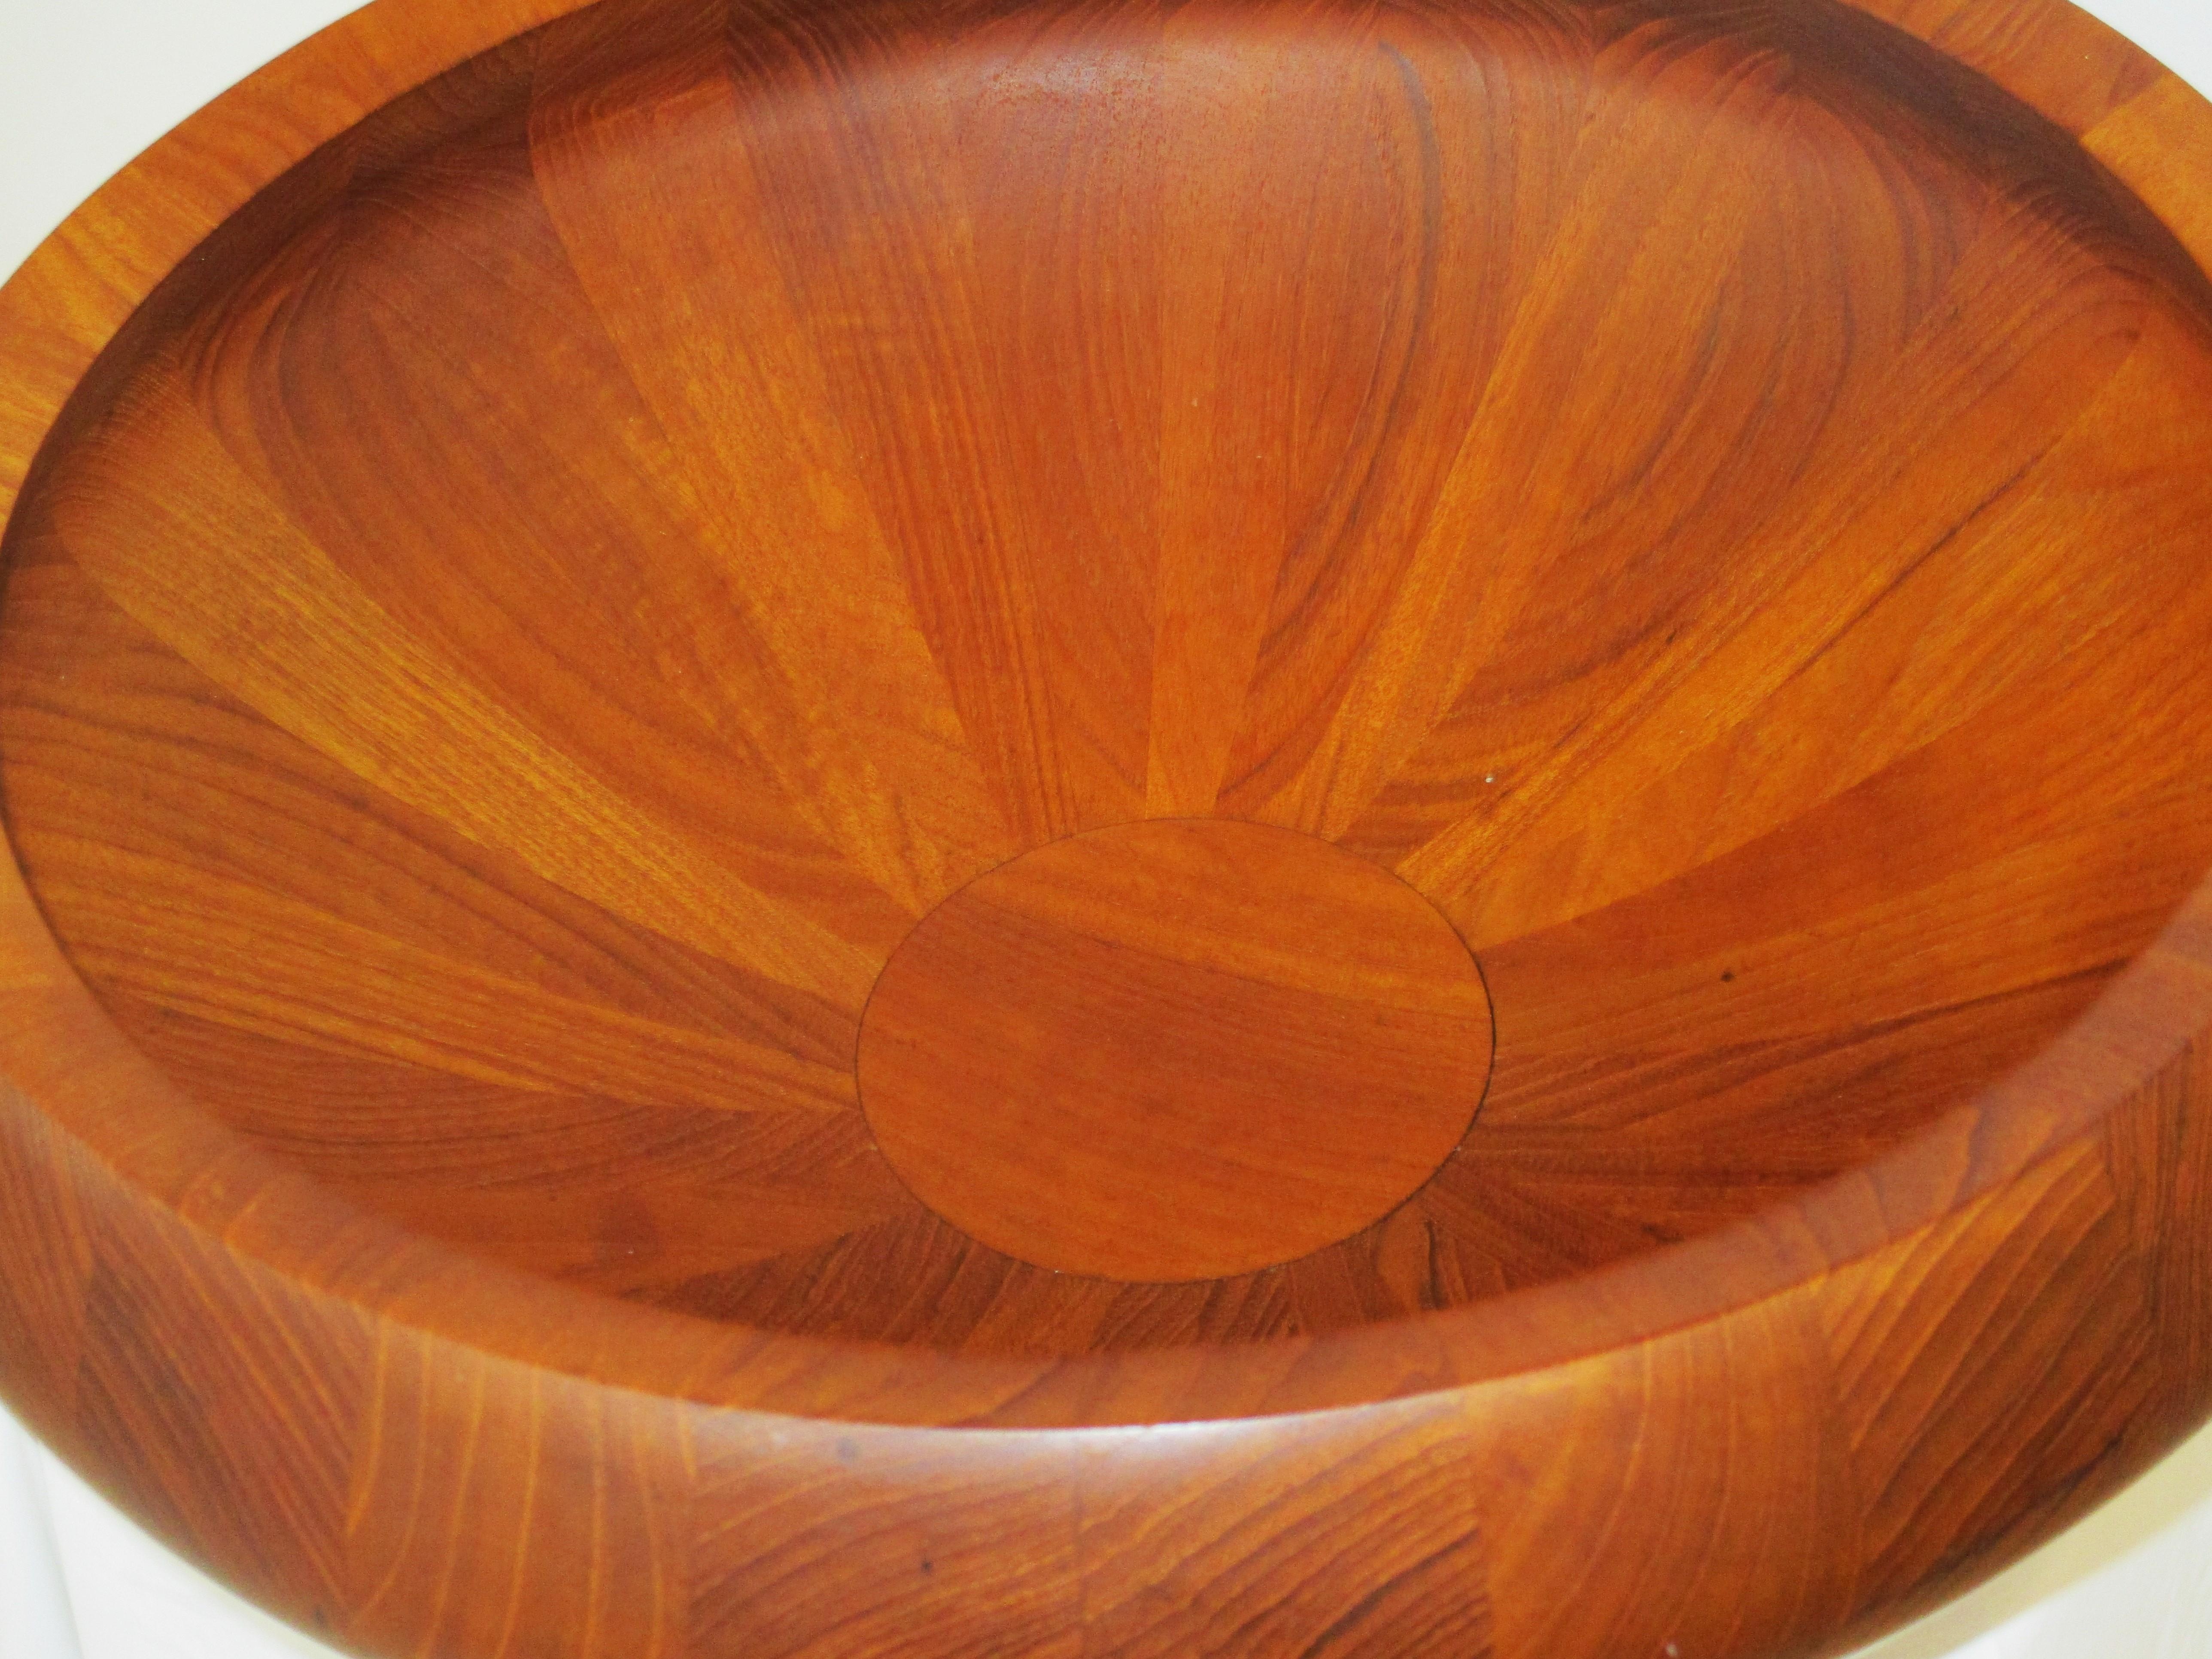 Large Dansk Staved Teak Centerpiece / Serving Bowl by Jens Quistgaard  In Good Condition For Sale In Cincinnati, OH